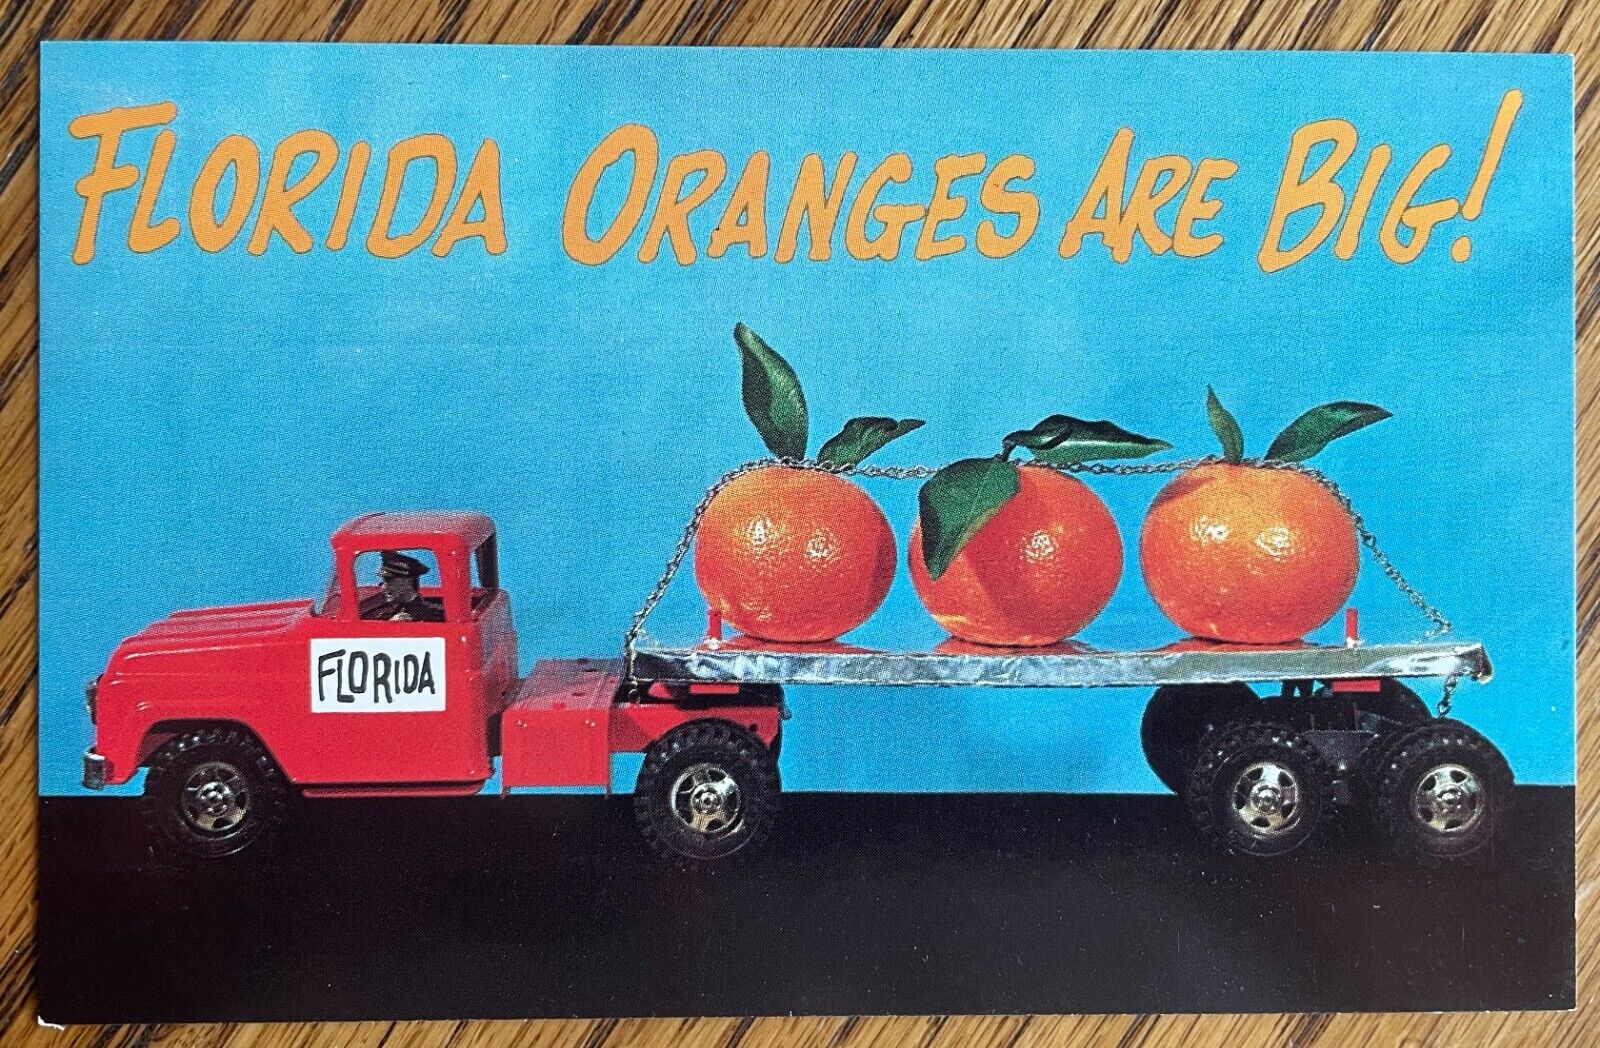 Vintage Florida Oranges postcard, unposted, 5.5x3.5 in, Florida Oranges are Big